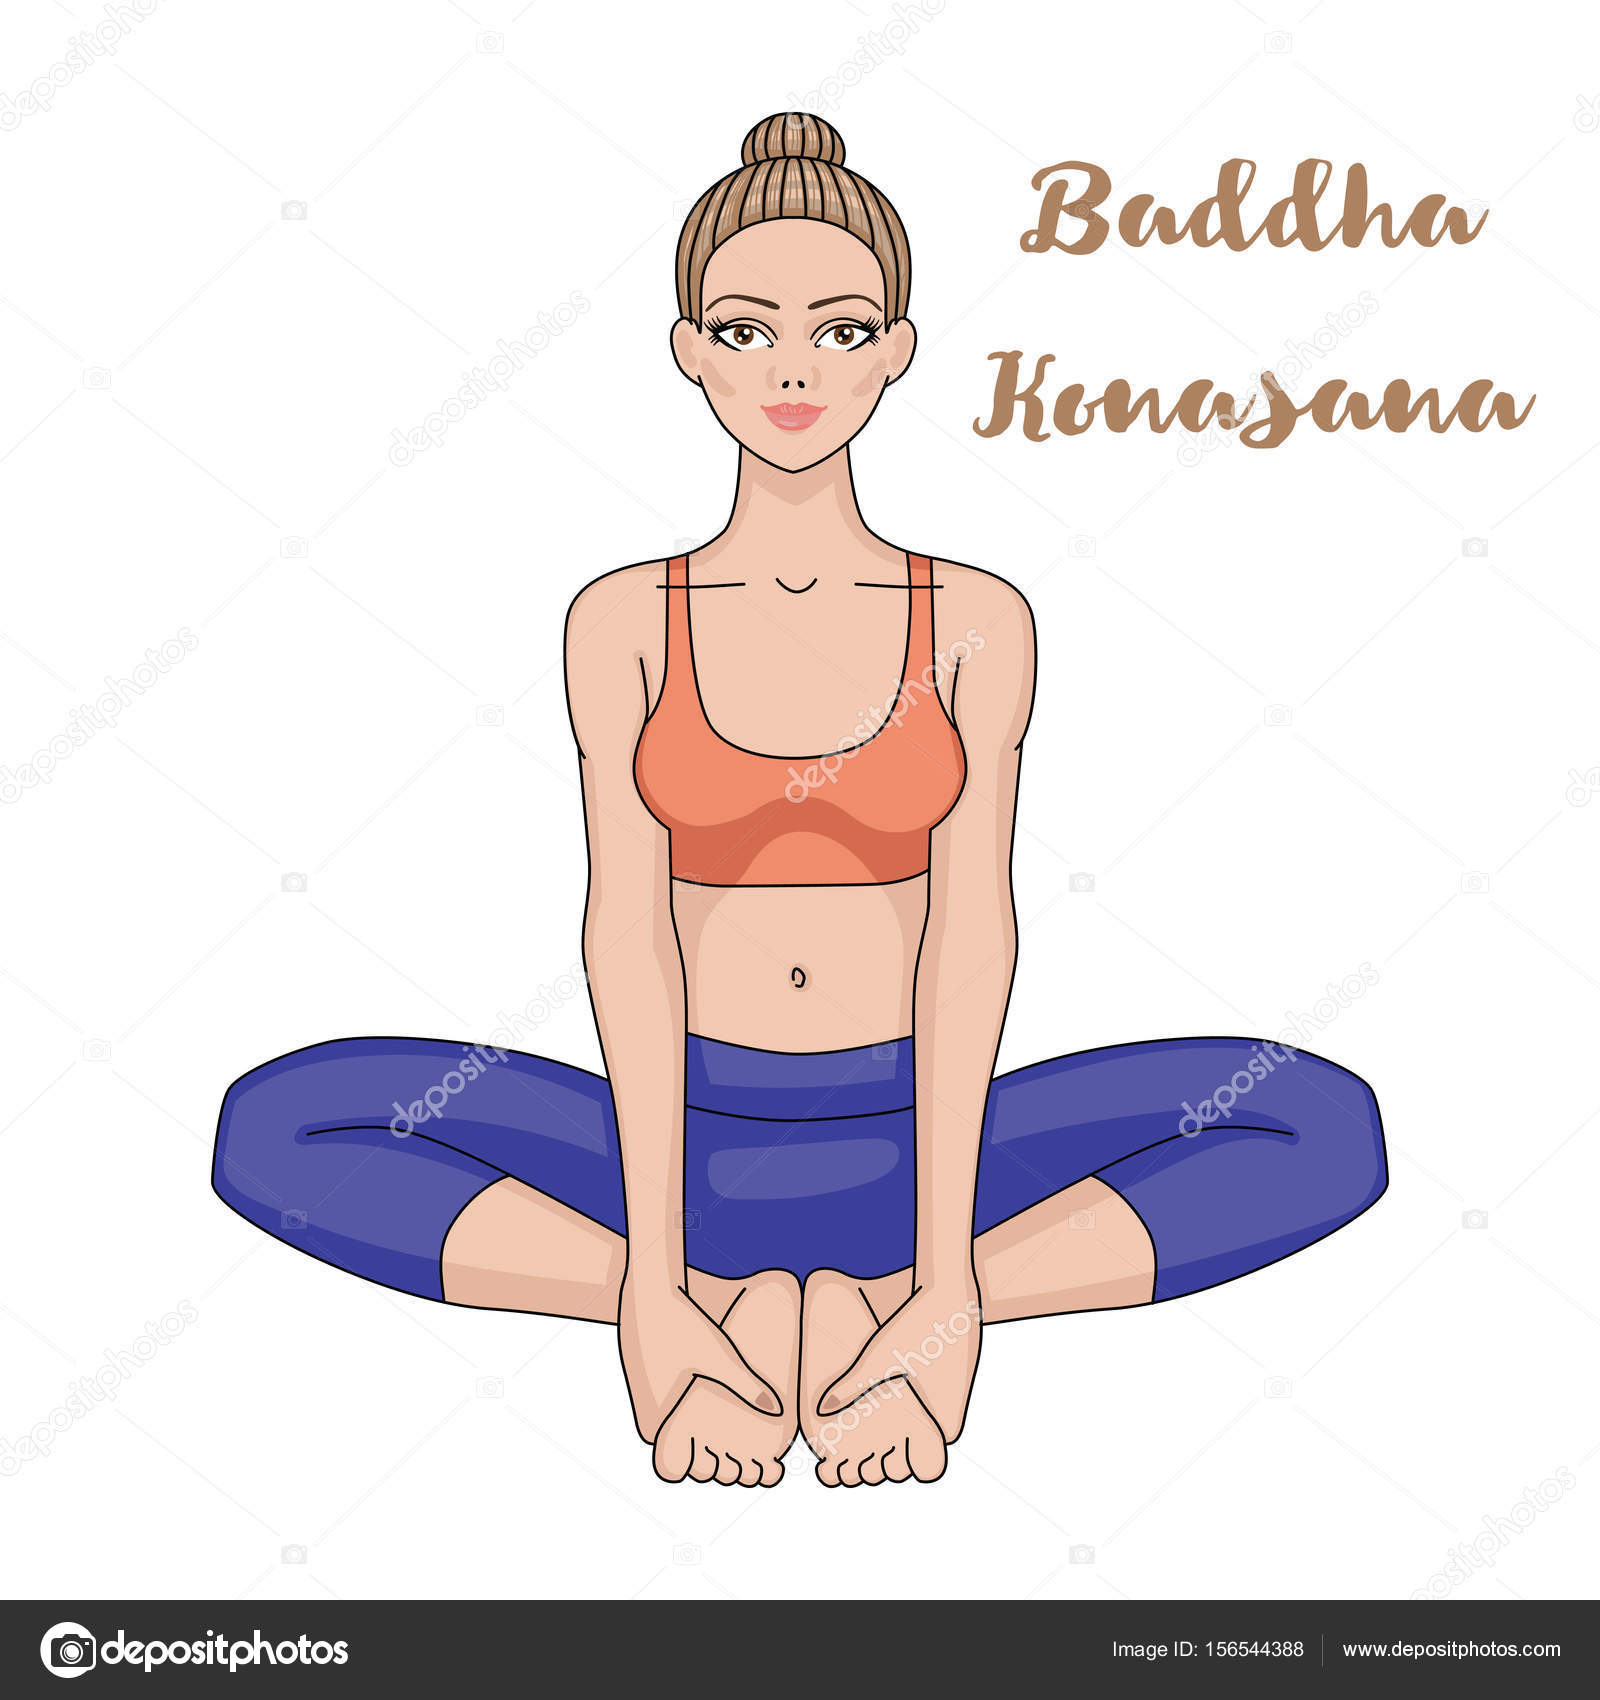 How to do Samakonasana – The Right Angle Posture - The Yoga Institute